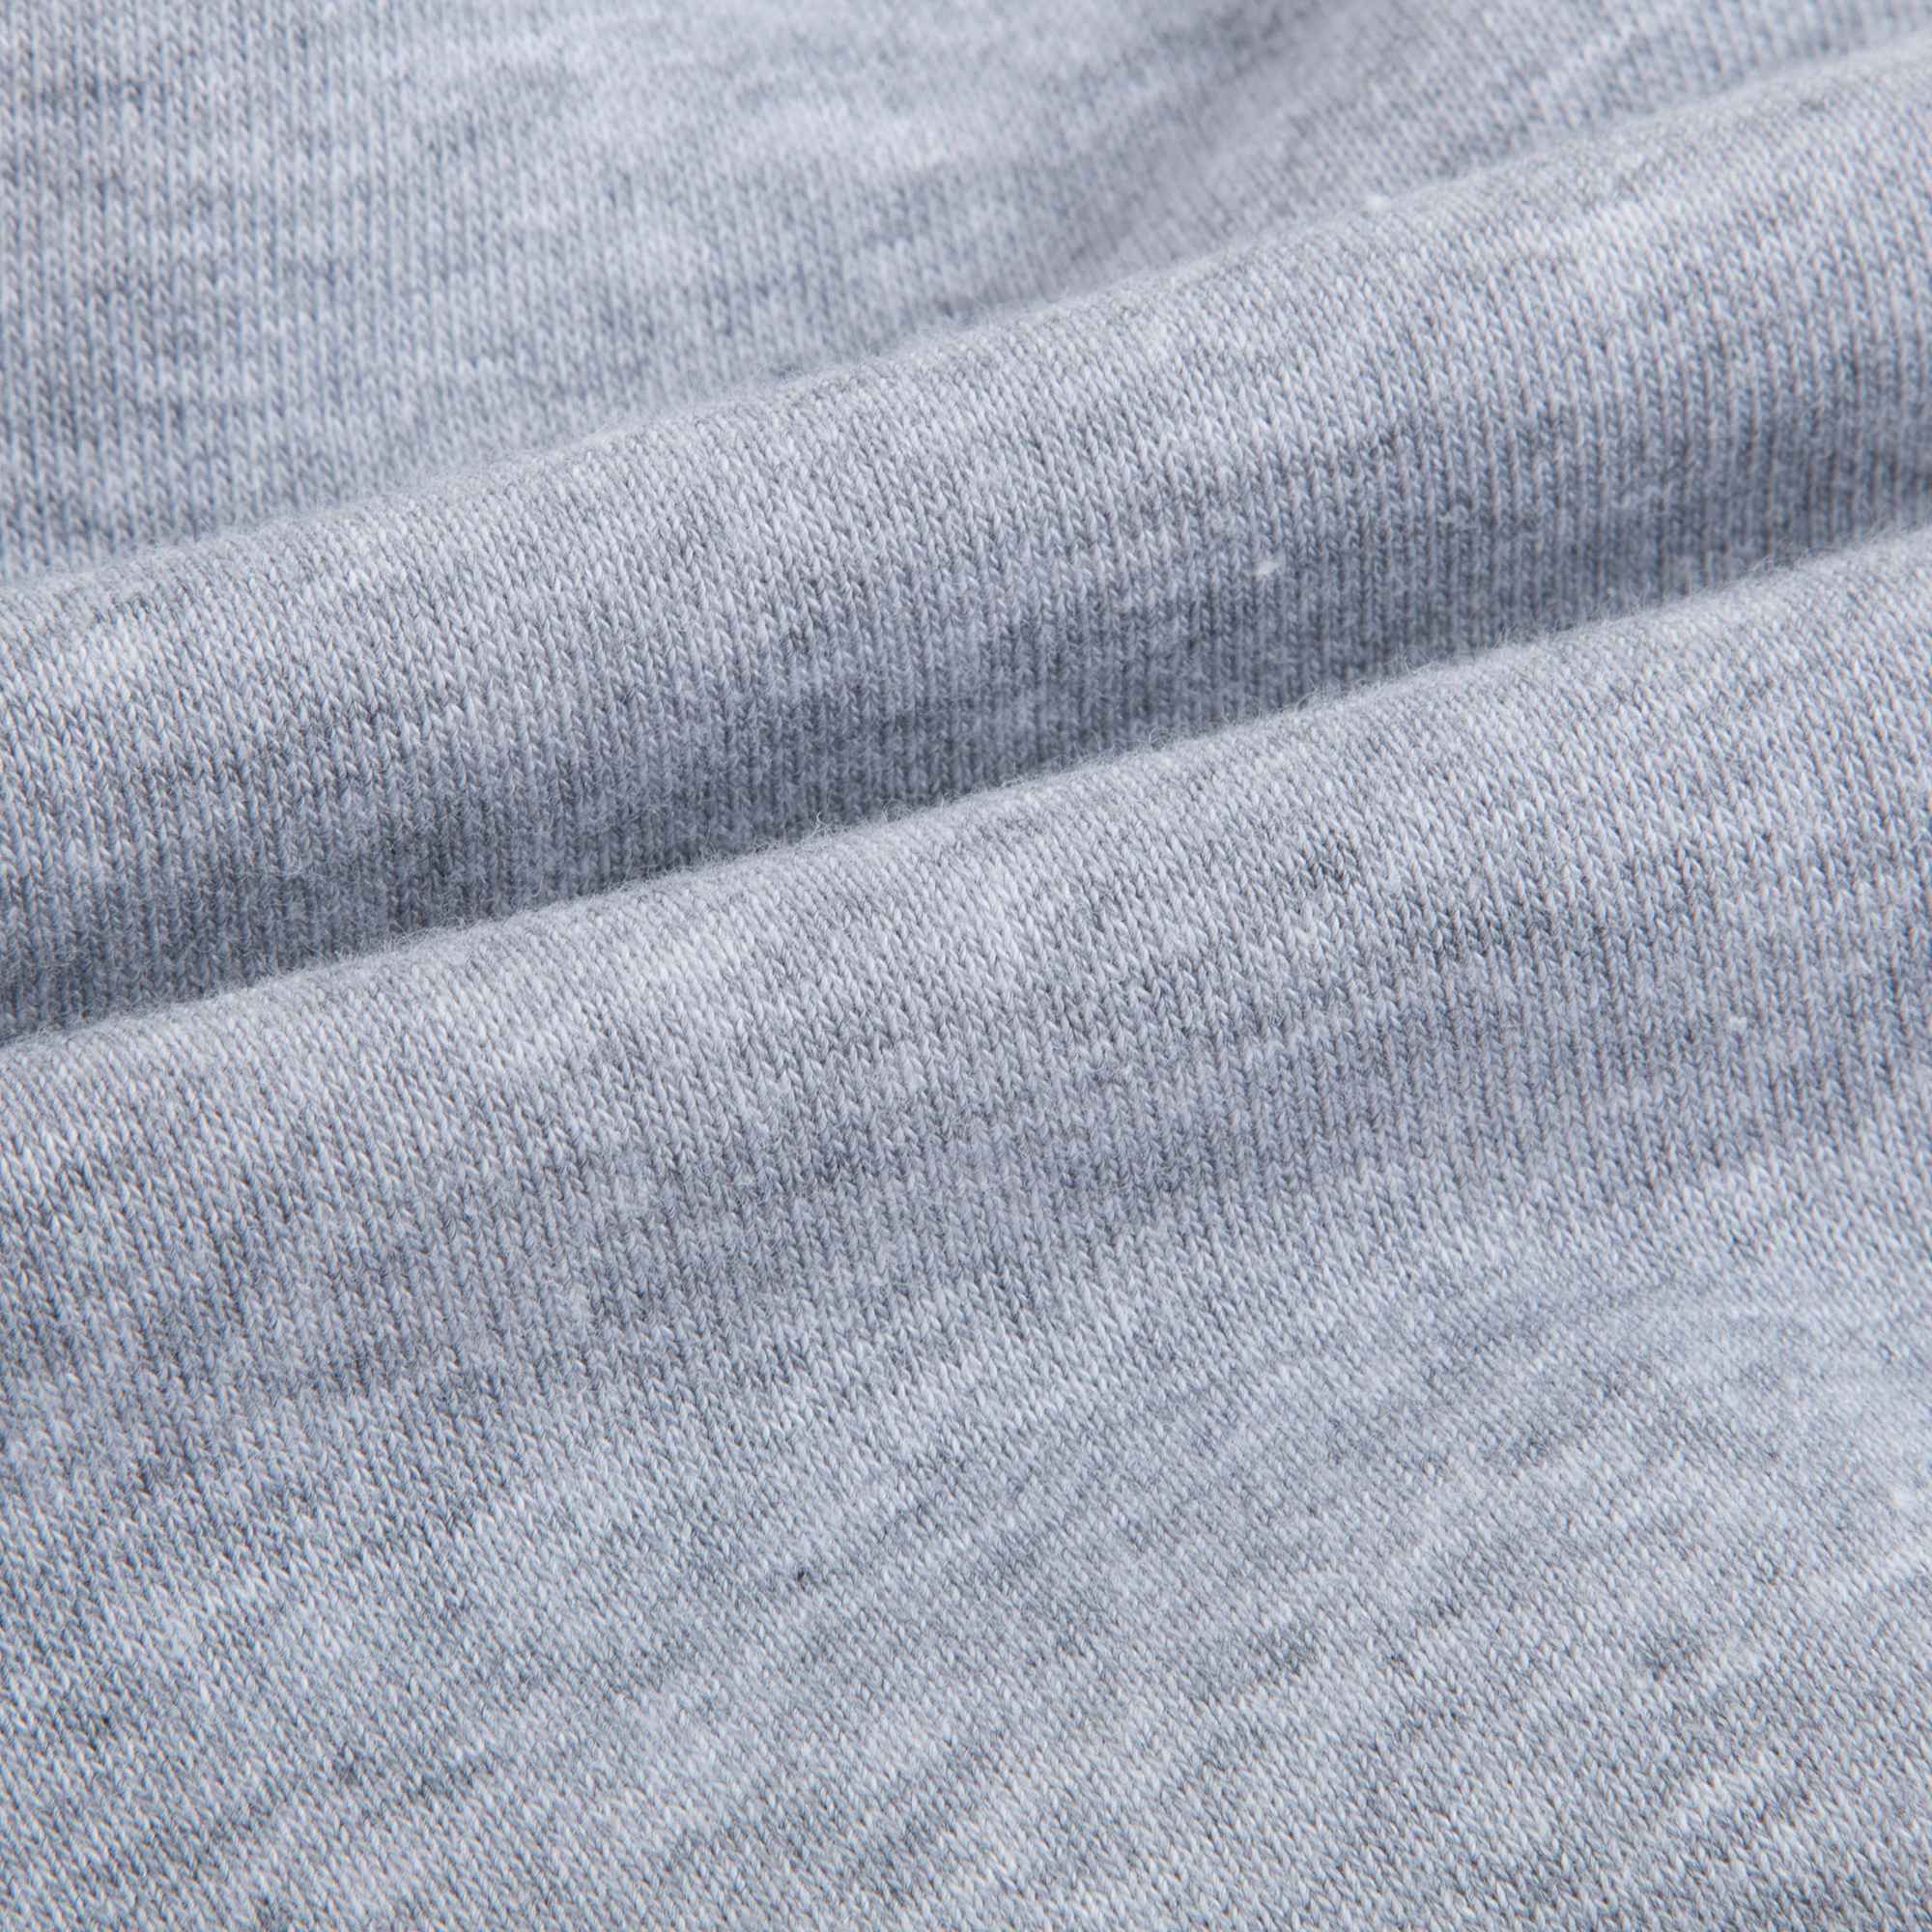 Baby Girls Marl Grey Cotton Sweatshirt